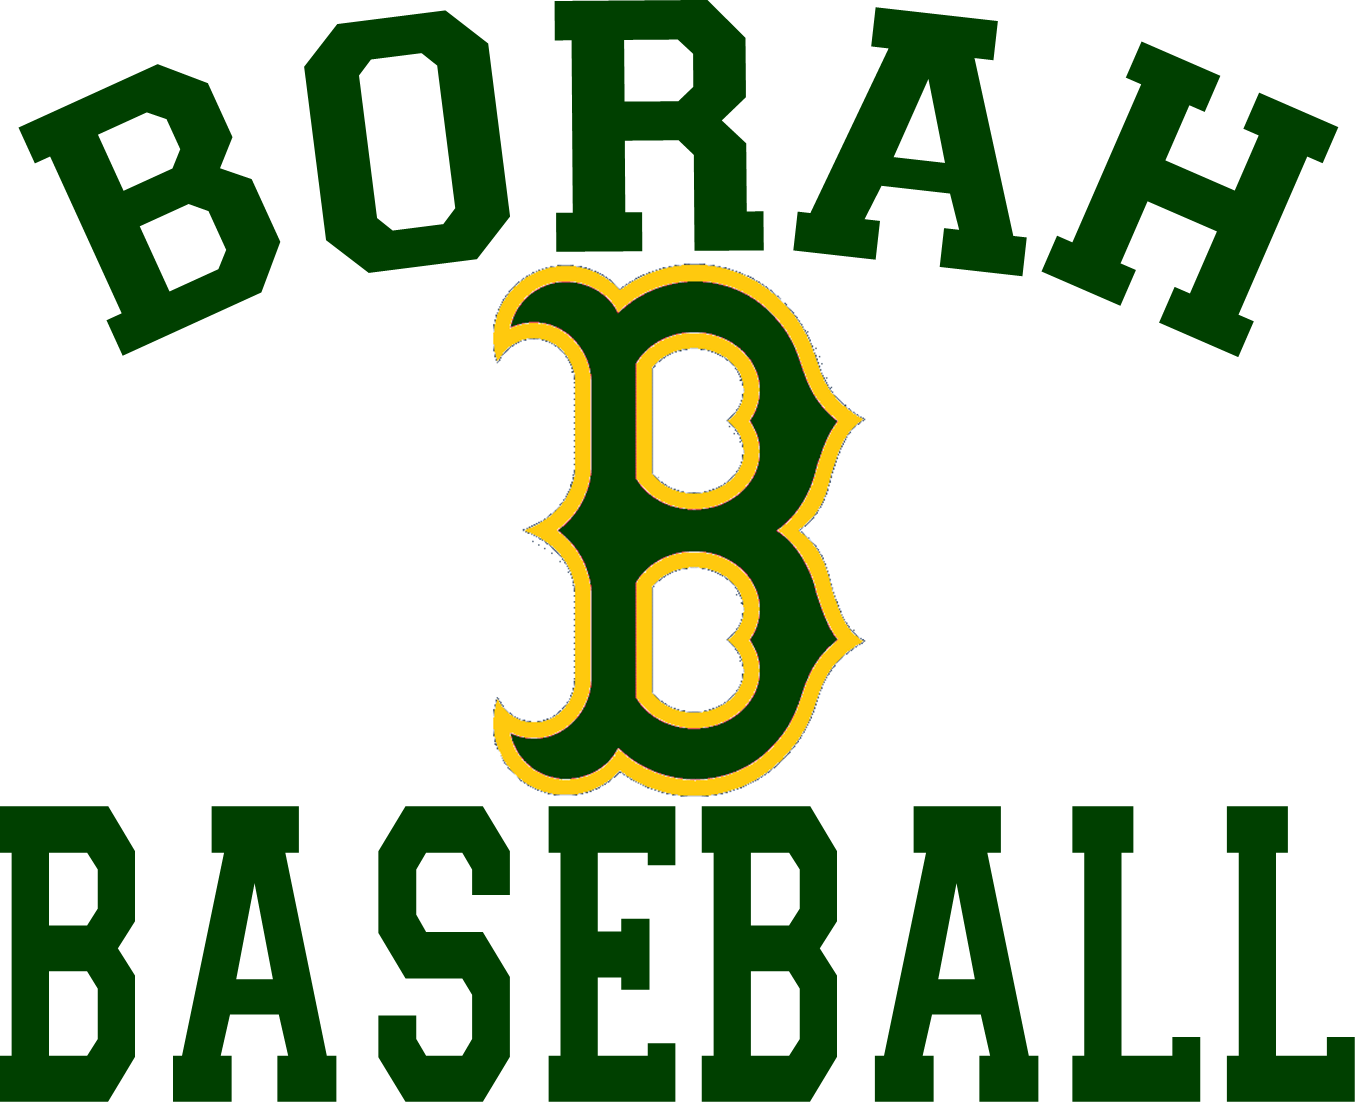 Borah Logo - Baseball Program Logo 6. Borah Lions Baseball